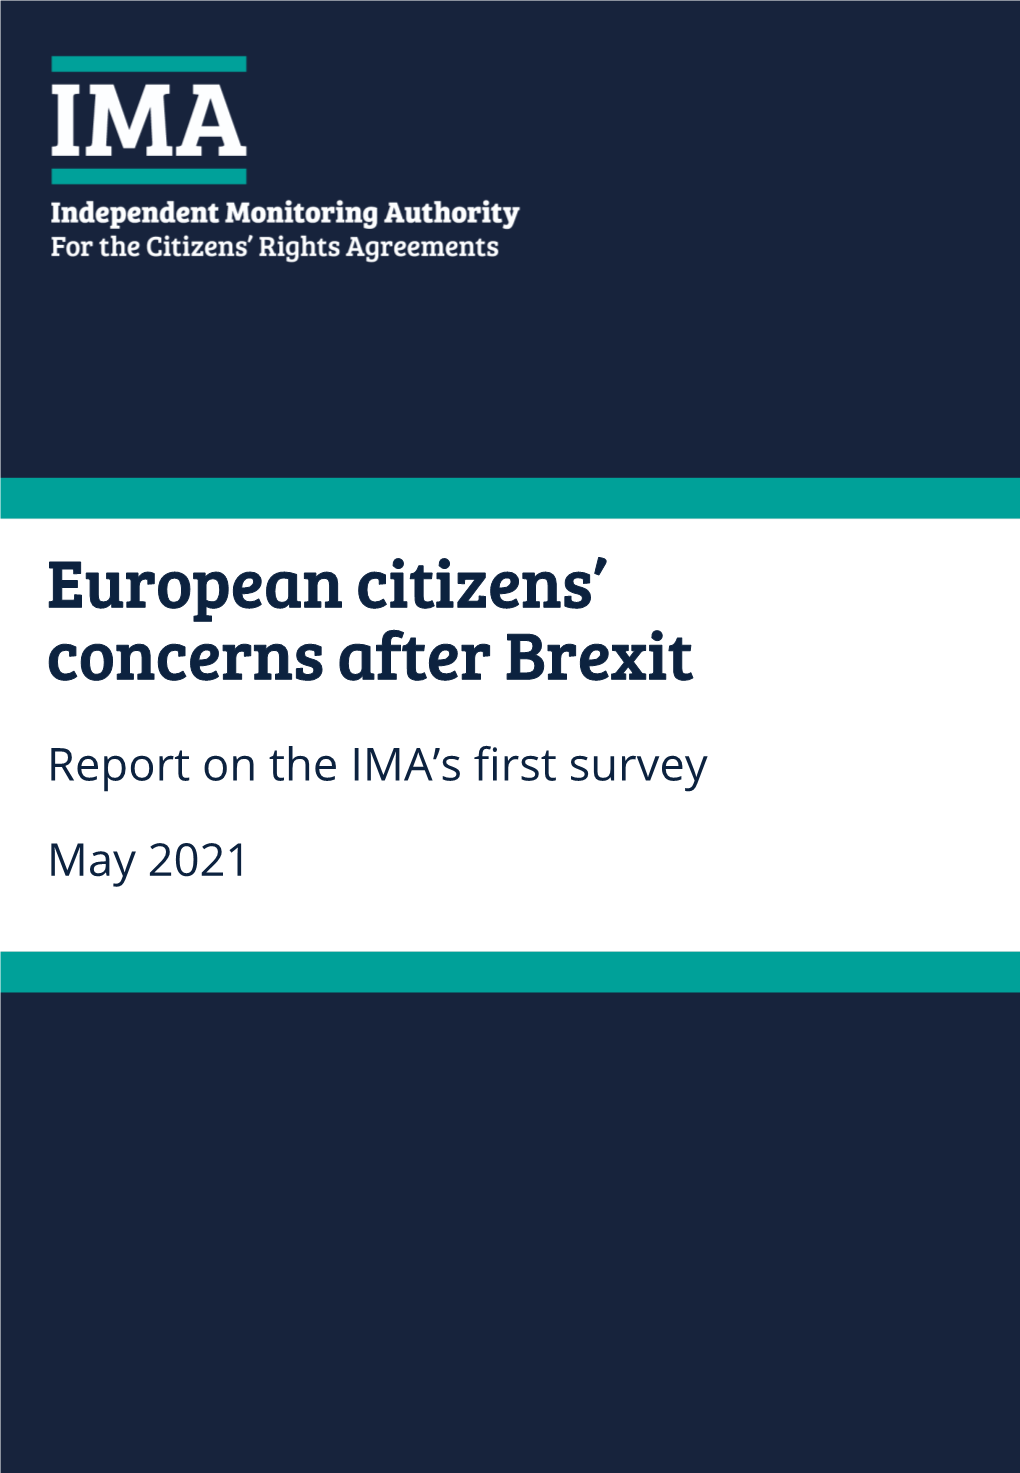 IMA Report: European Citizens Concerns After Brexit